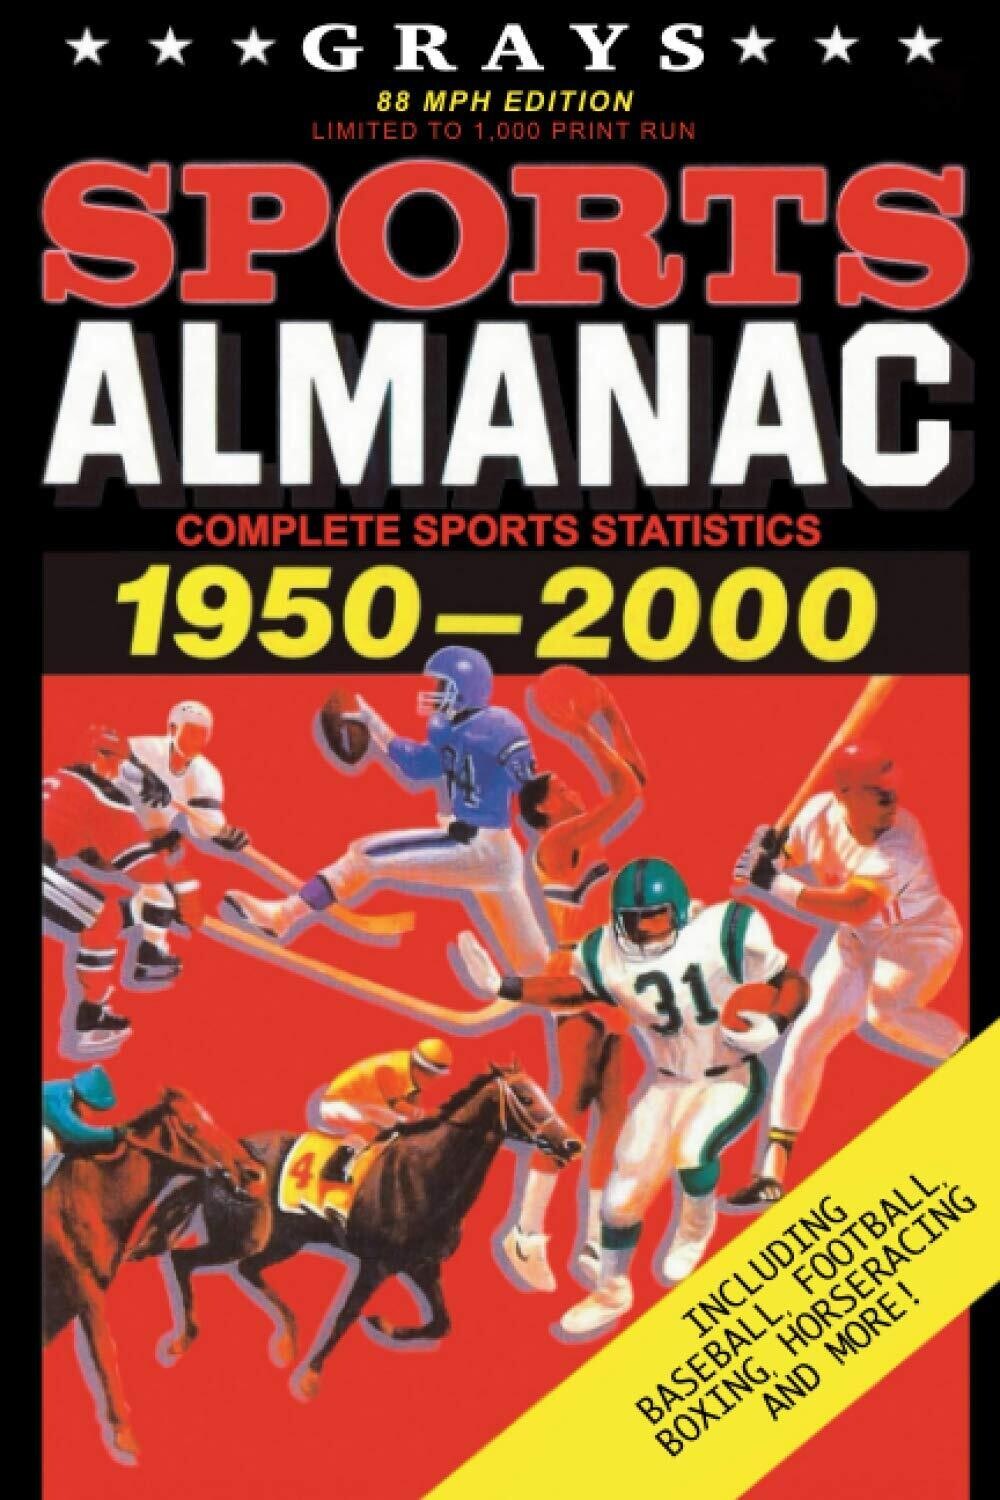 Grays Sports Almanac: Complete Sports Statistics 1950-2000 Book [88mph Edition - LIMITED TO 1,000 PRINT RUN]